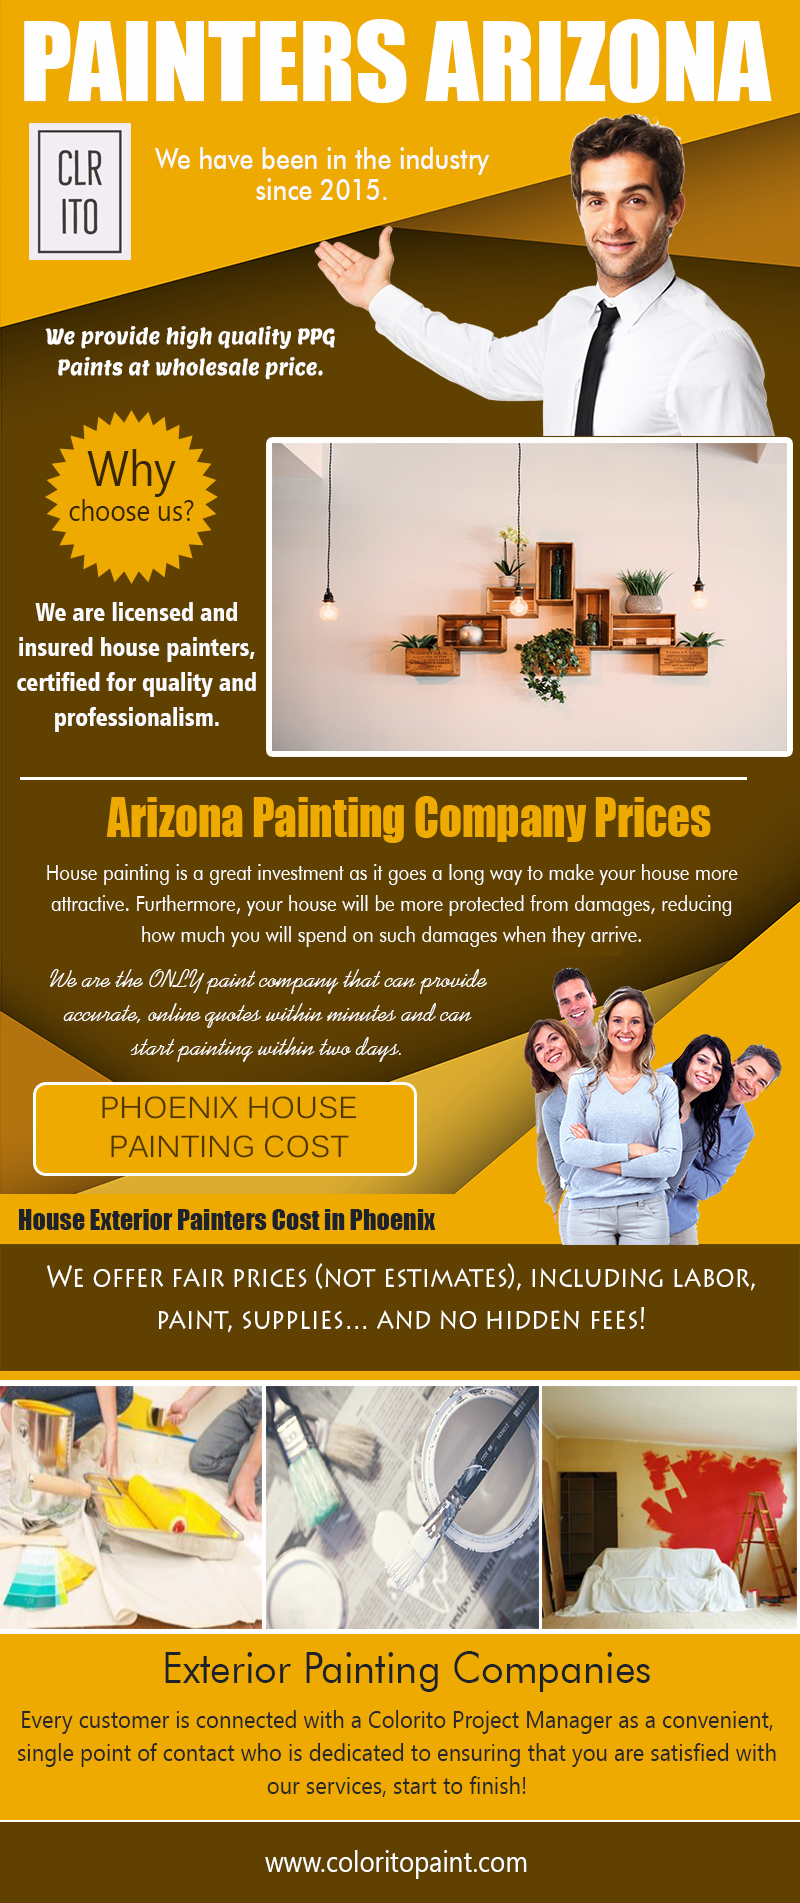 Painters Arizona